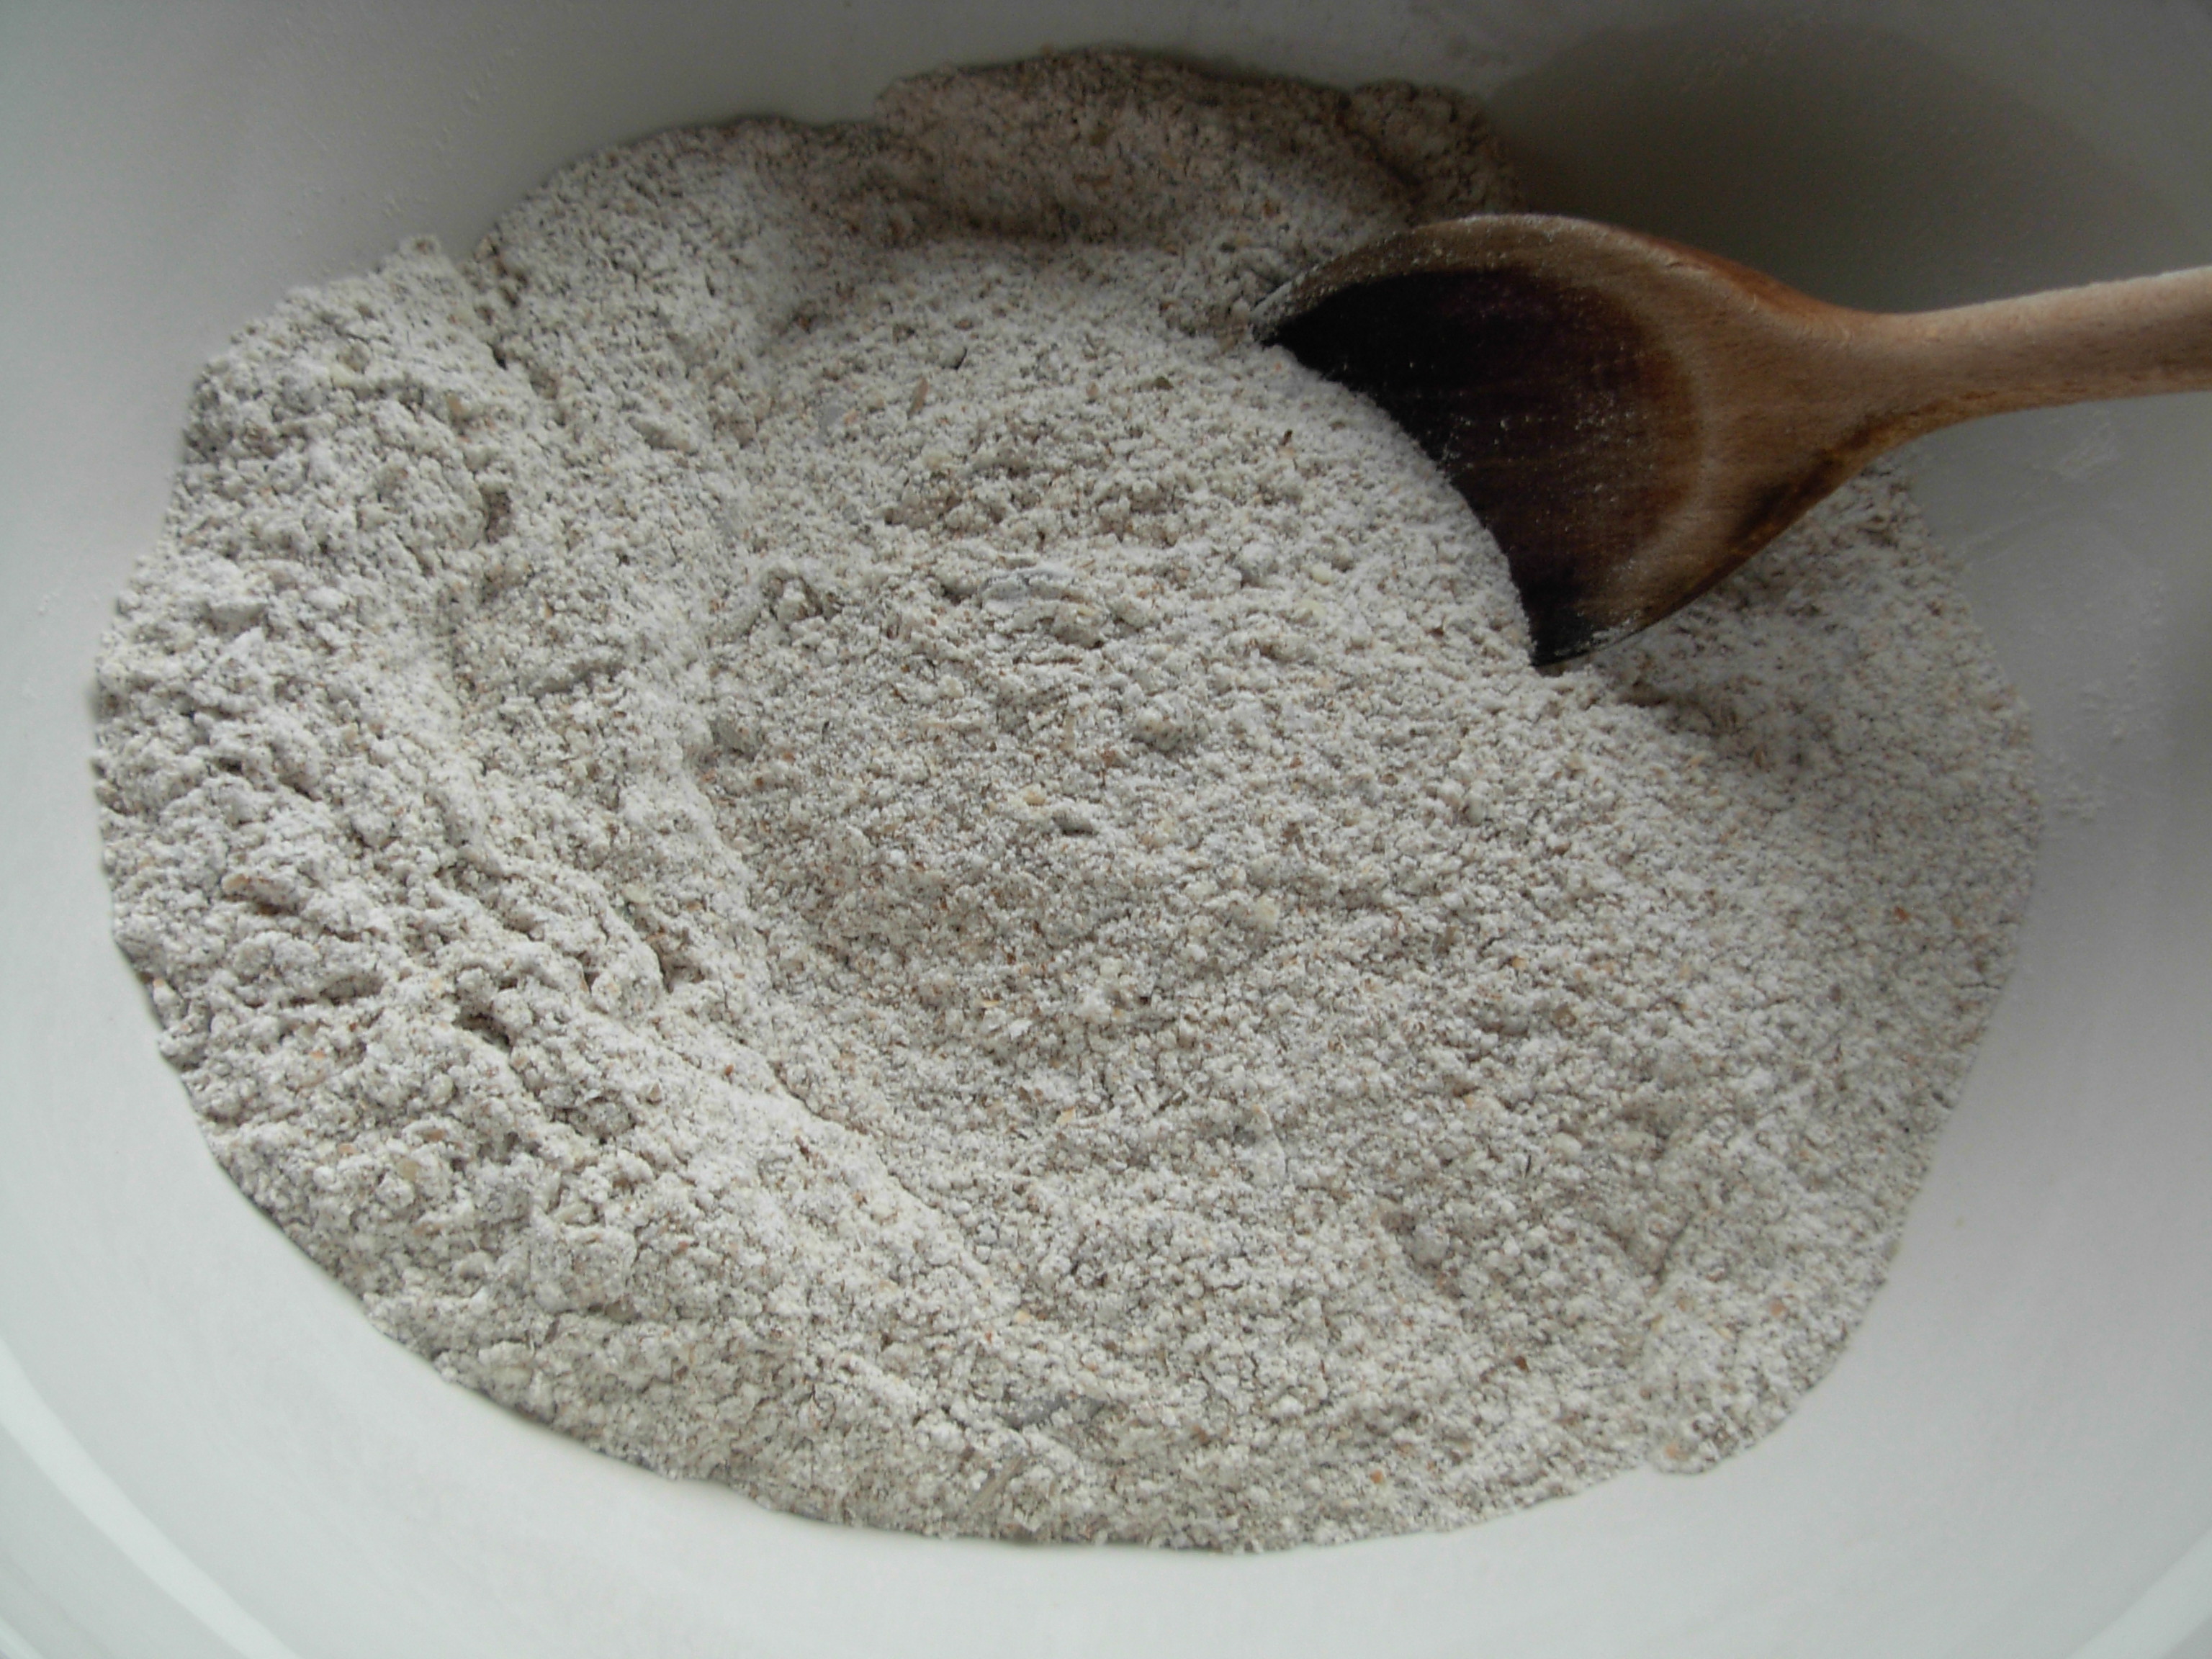 Rye flour and seeds